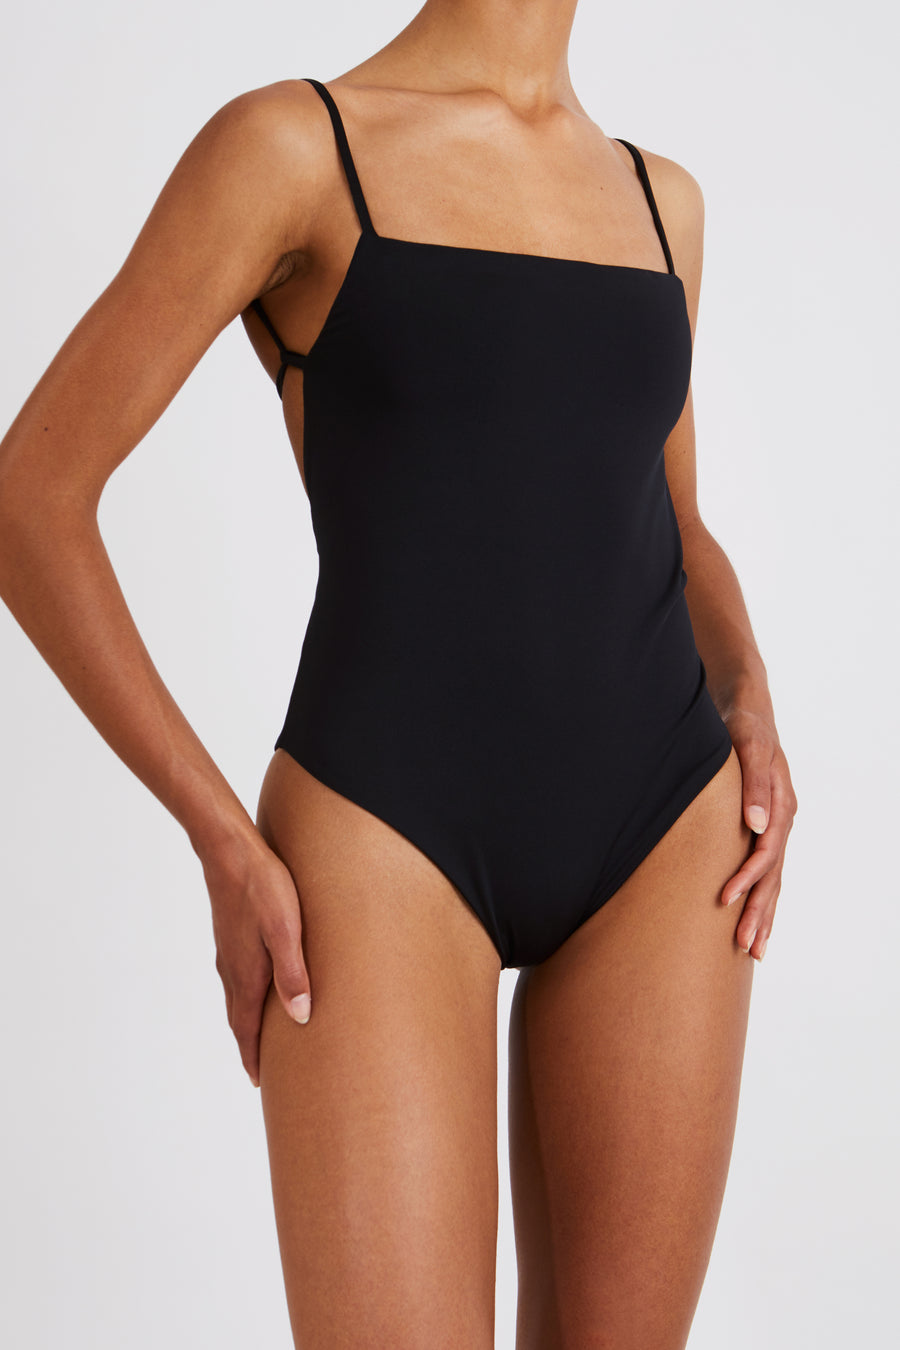 Swimsuit – edgy, black